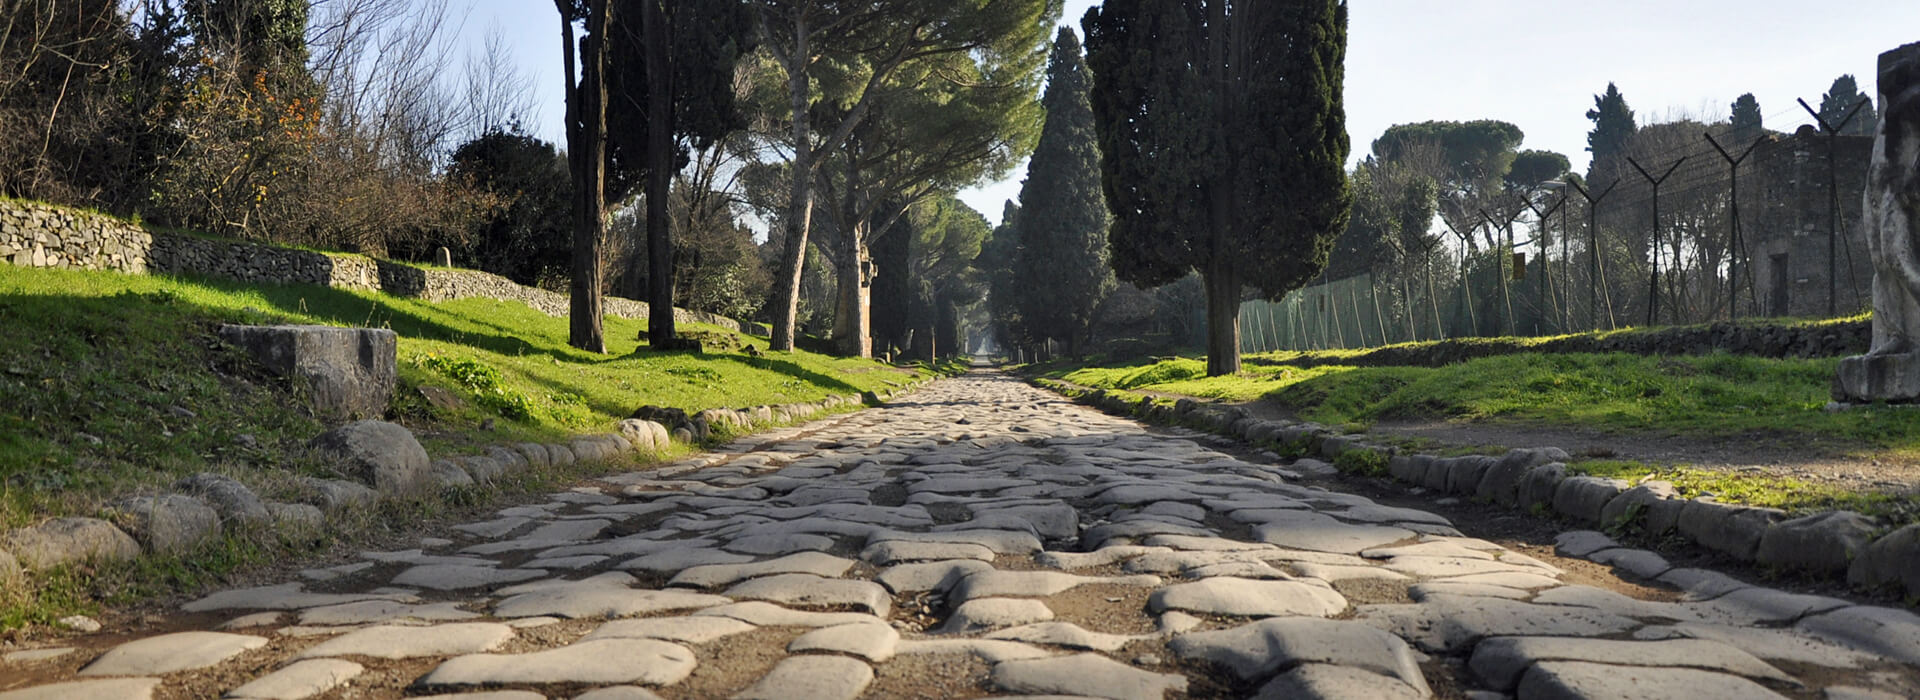 RomaGuideTour - Visite guidate a Roma - Appia Antica